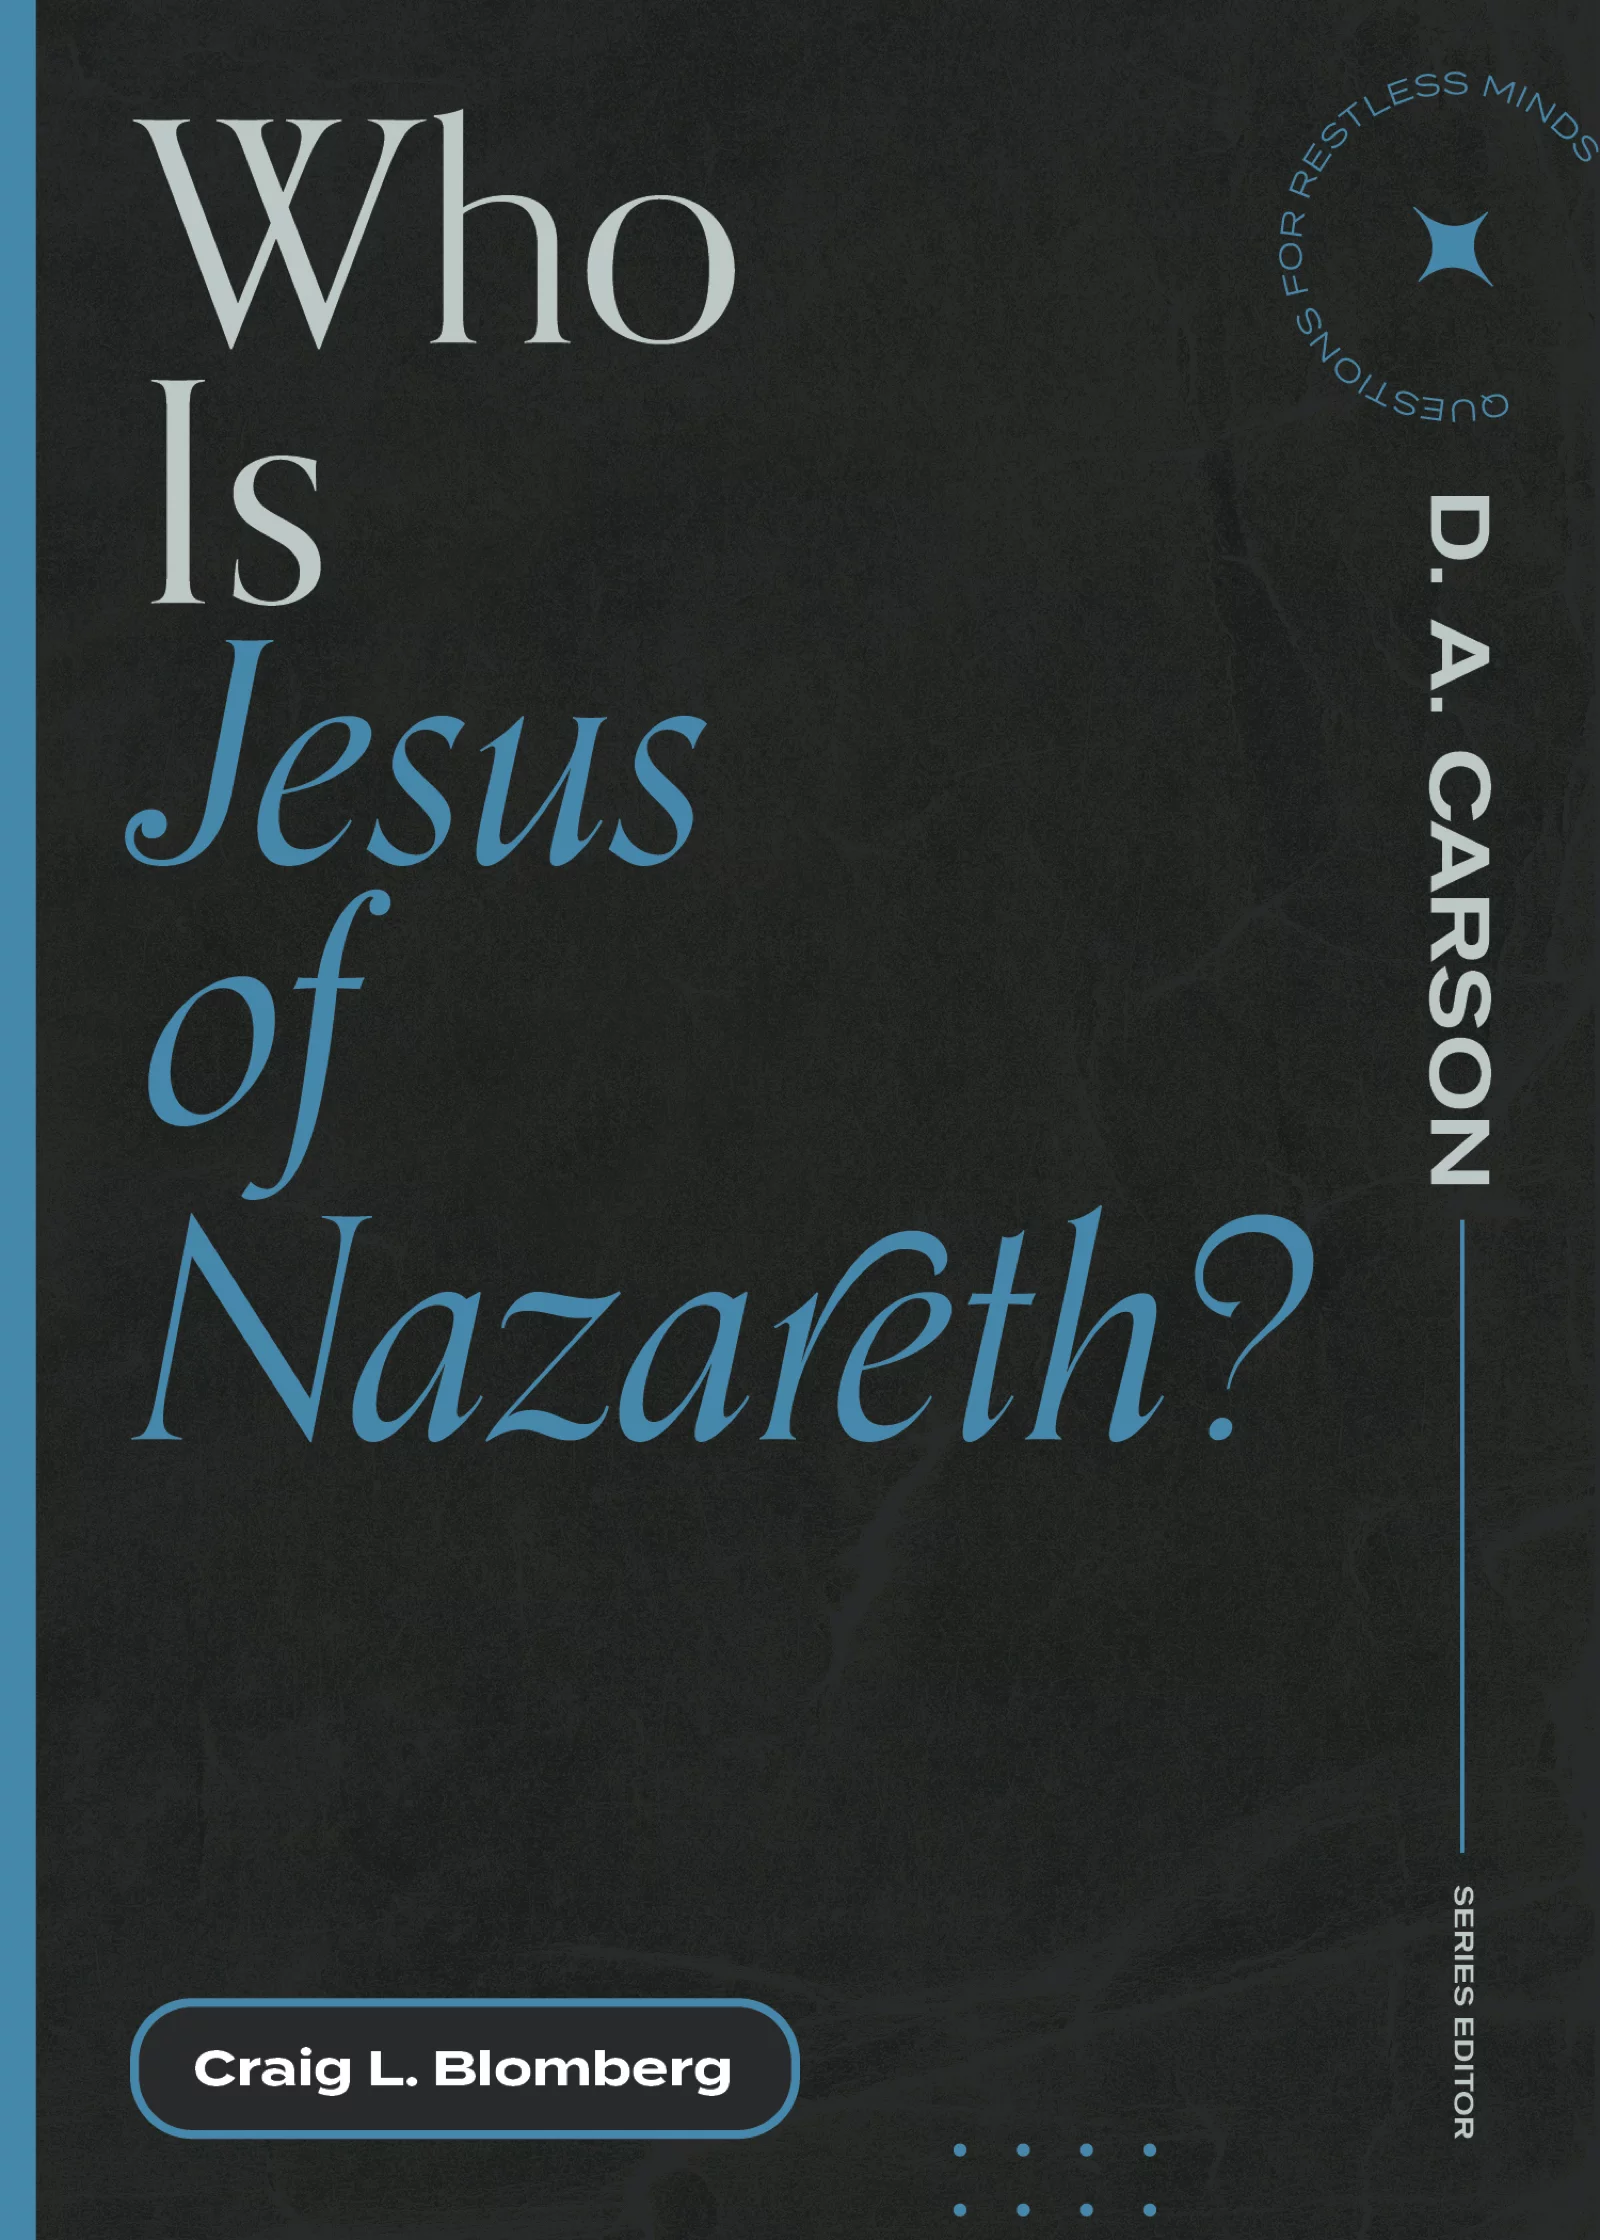  2022/08/Who-is-Jesus-of-Nazareth.webp 